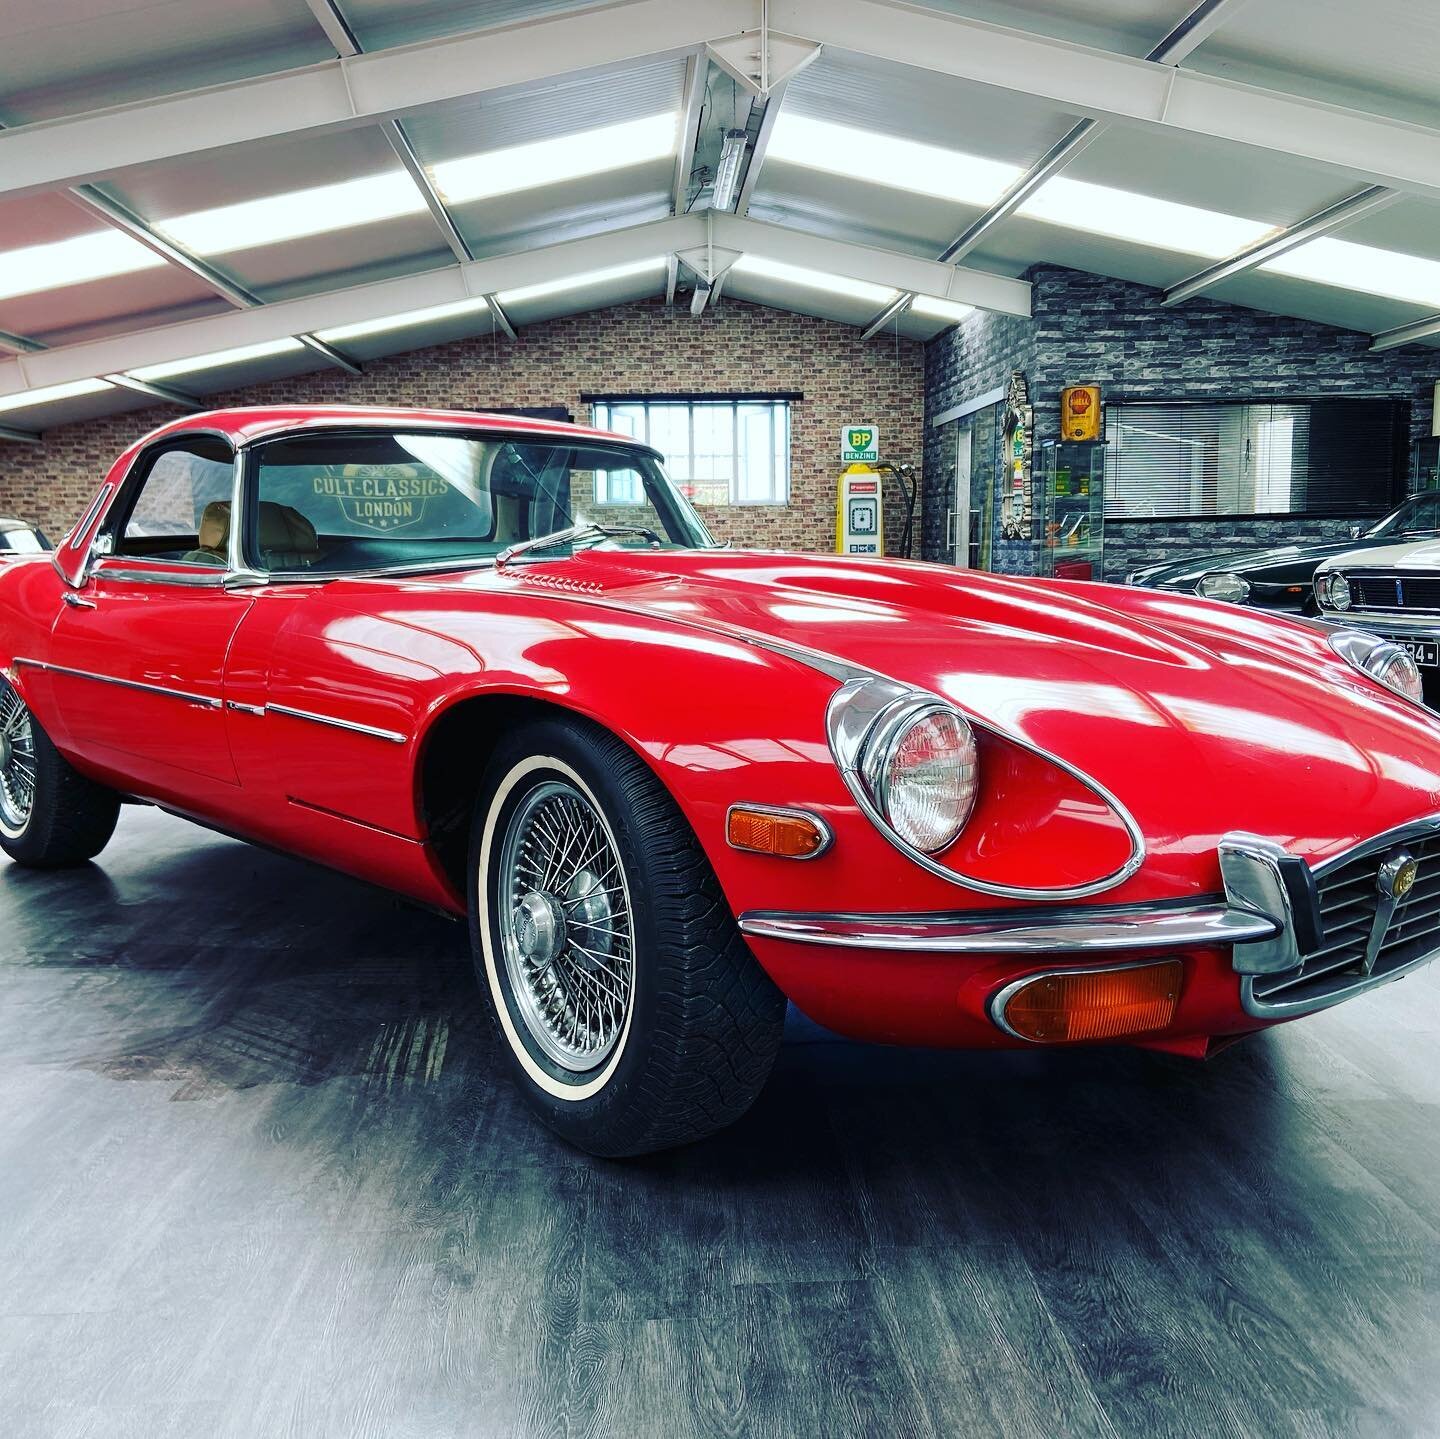 Jaguar e-type V12 #classic #rarecar #jaguar #redcar #forsale